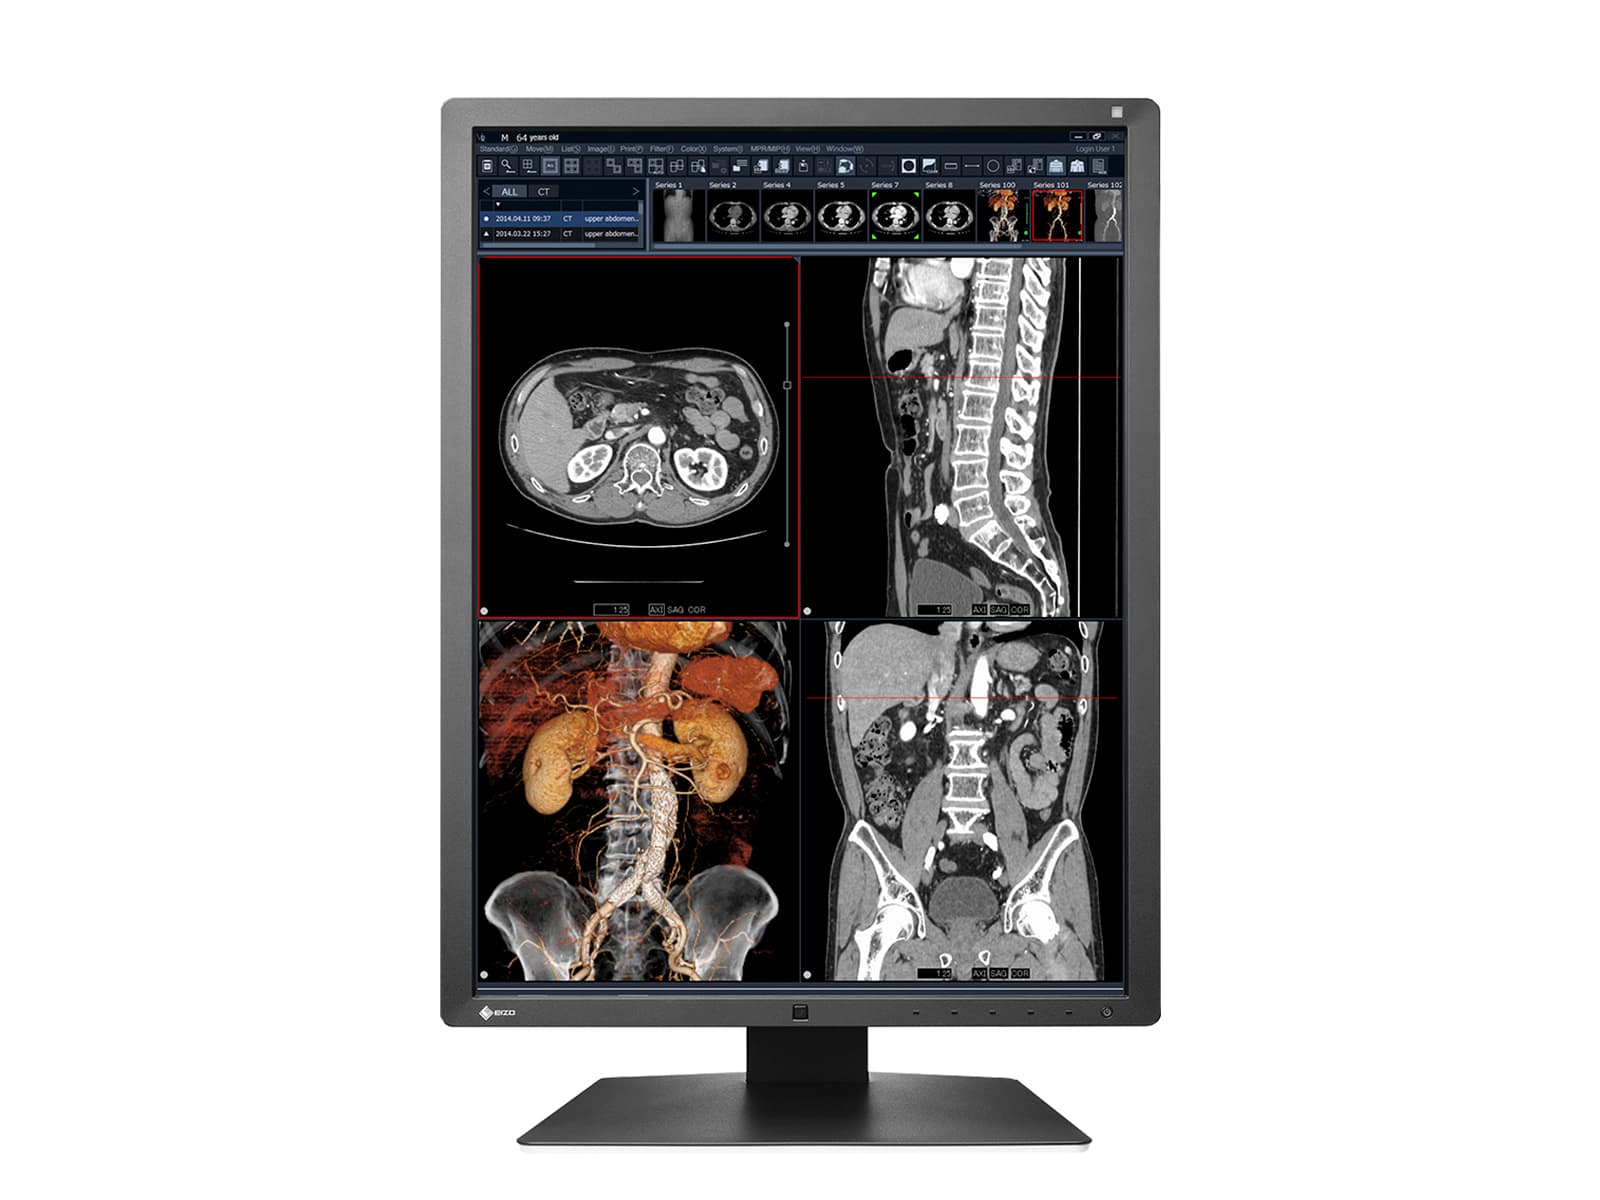 Eizo RadiForce RX250 2MP 21" Color LED Medical Diagnostic Radiology Display Monitor (RX250-BK) Monitors.com 